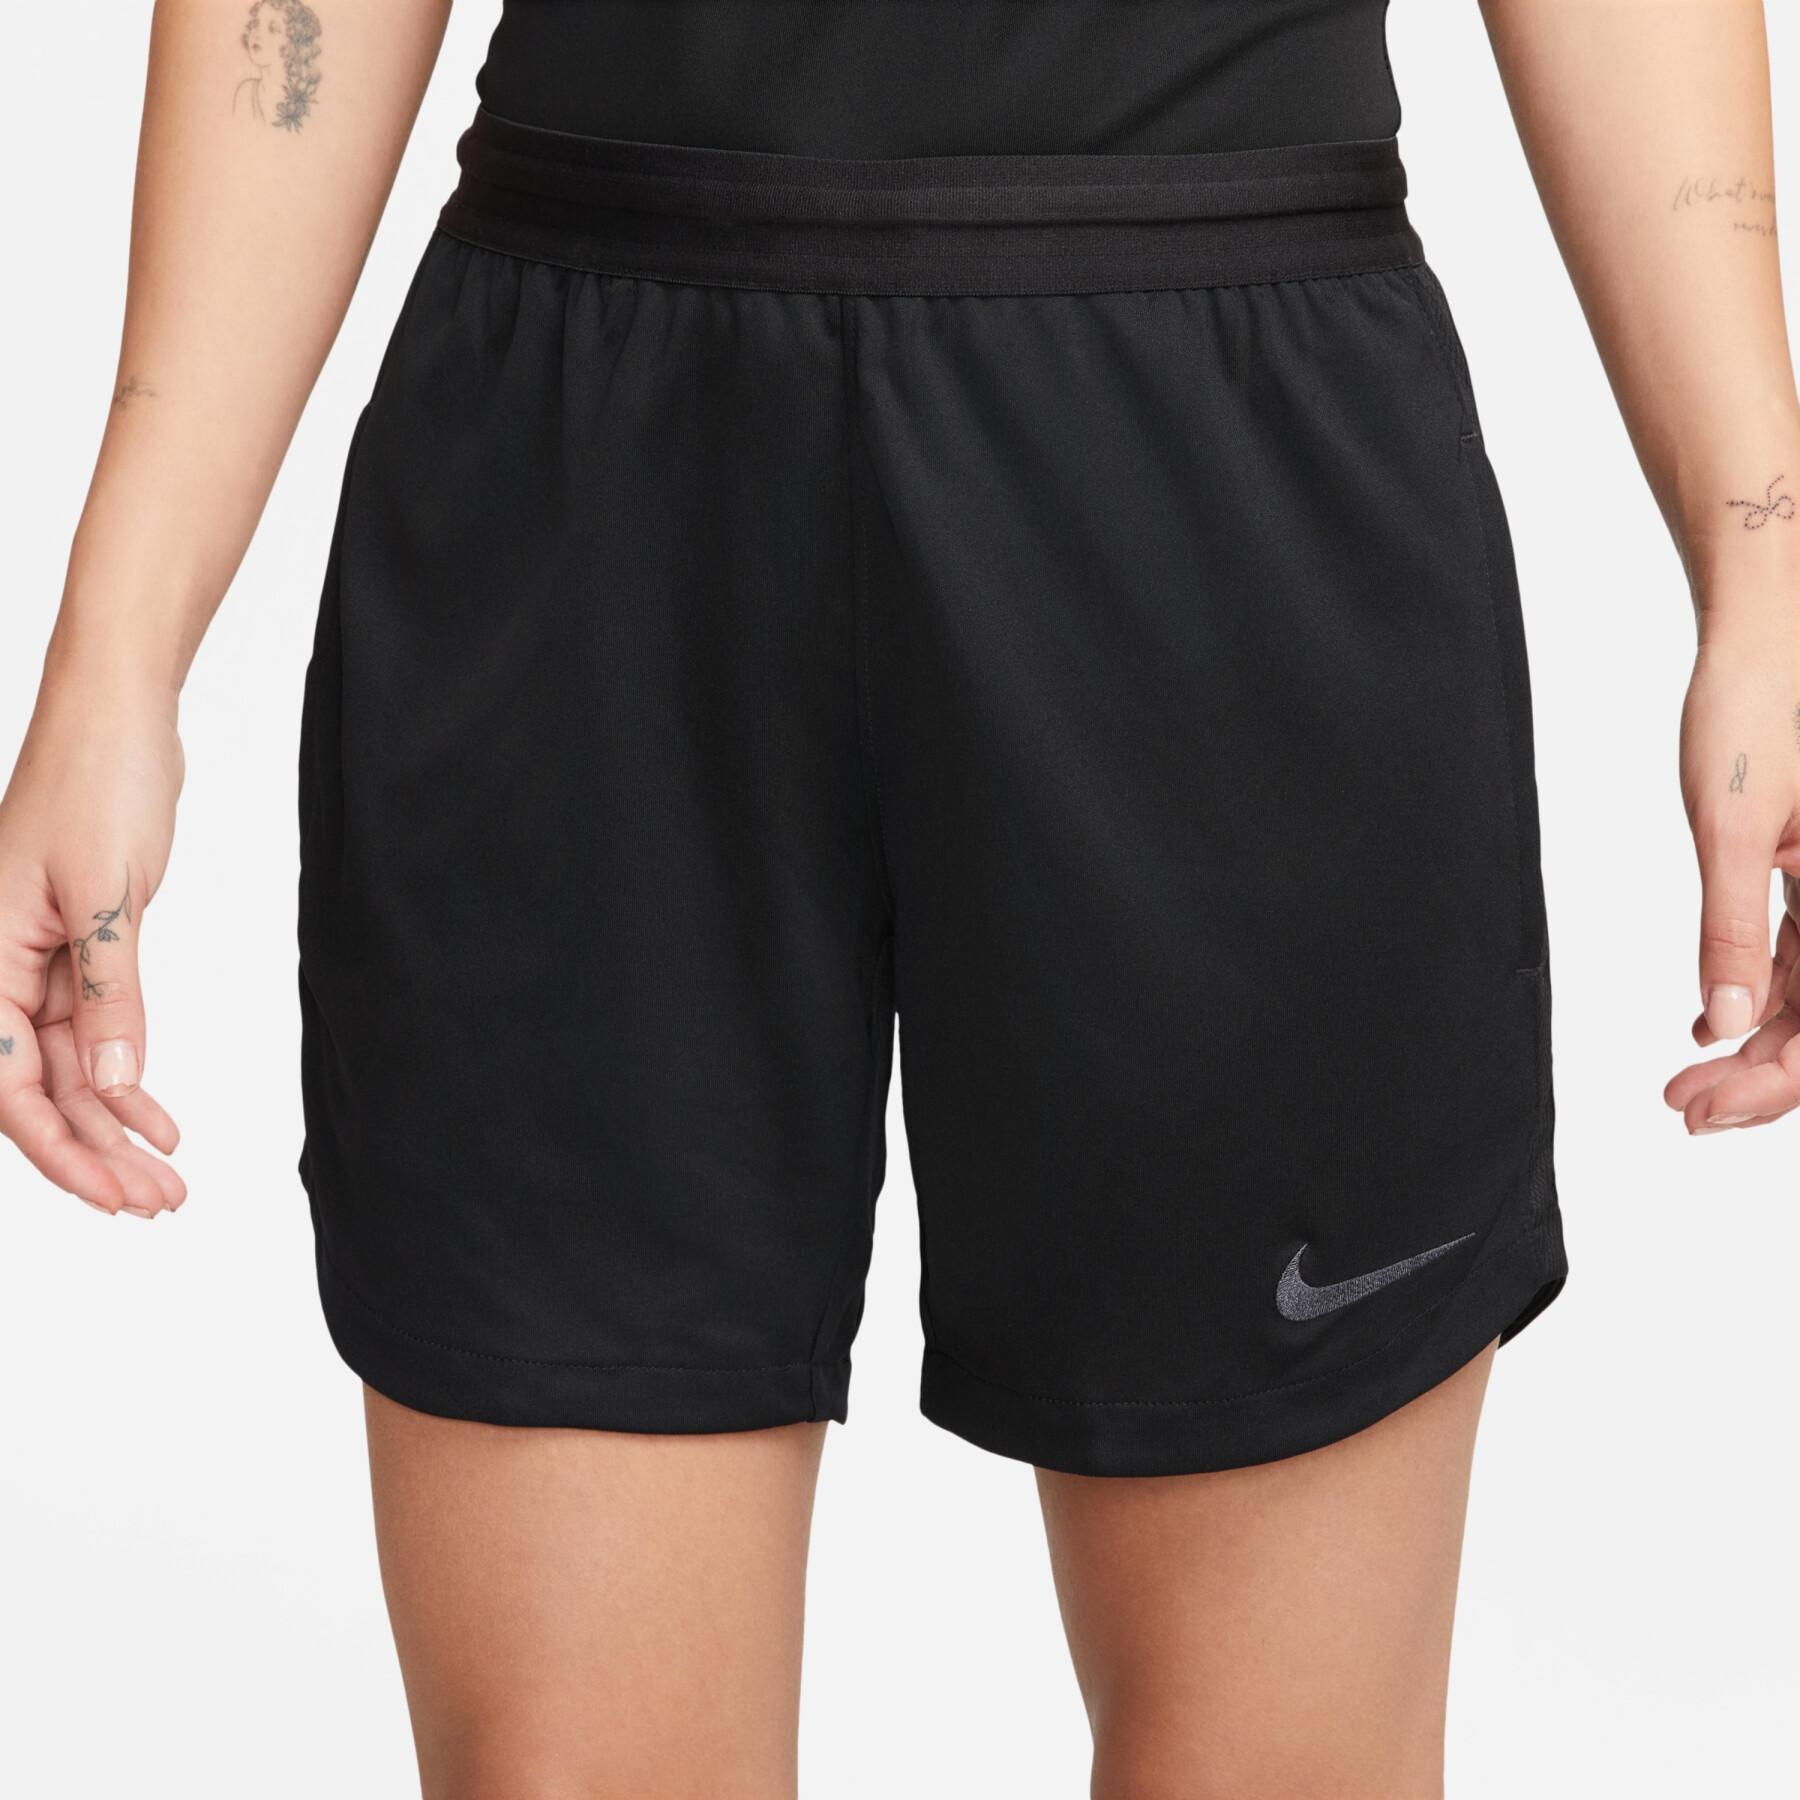 Women's shorts Nike Dri-FIT REF 2